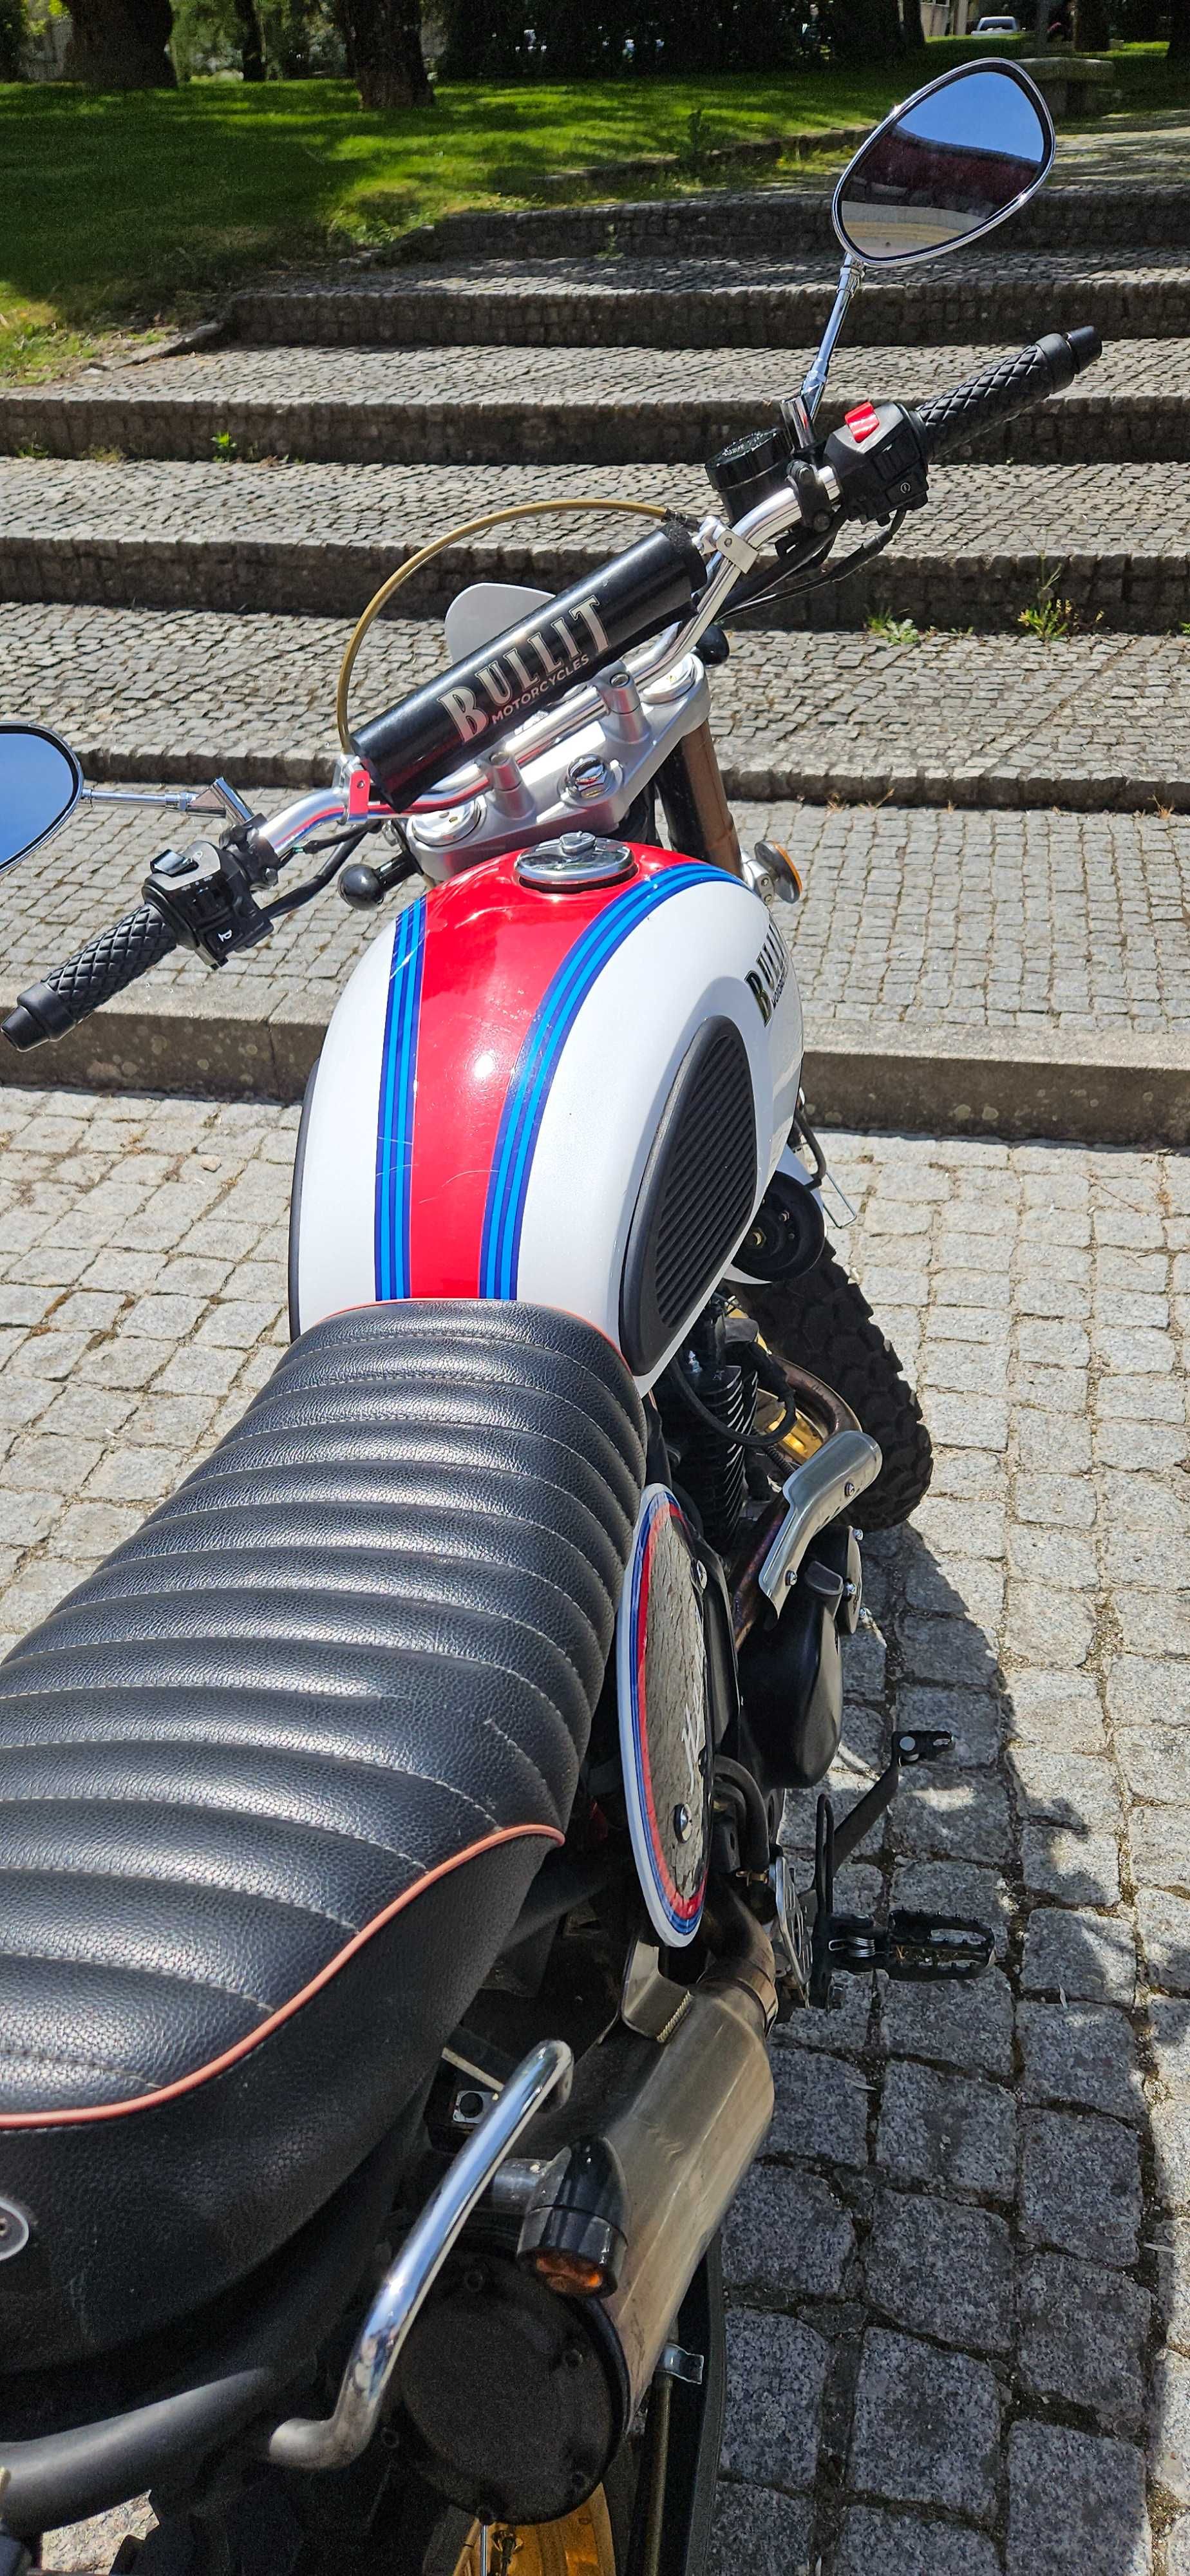 Moto 125cc Bullit hero